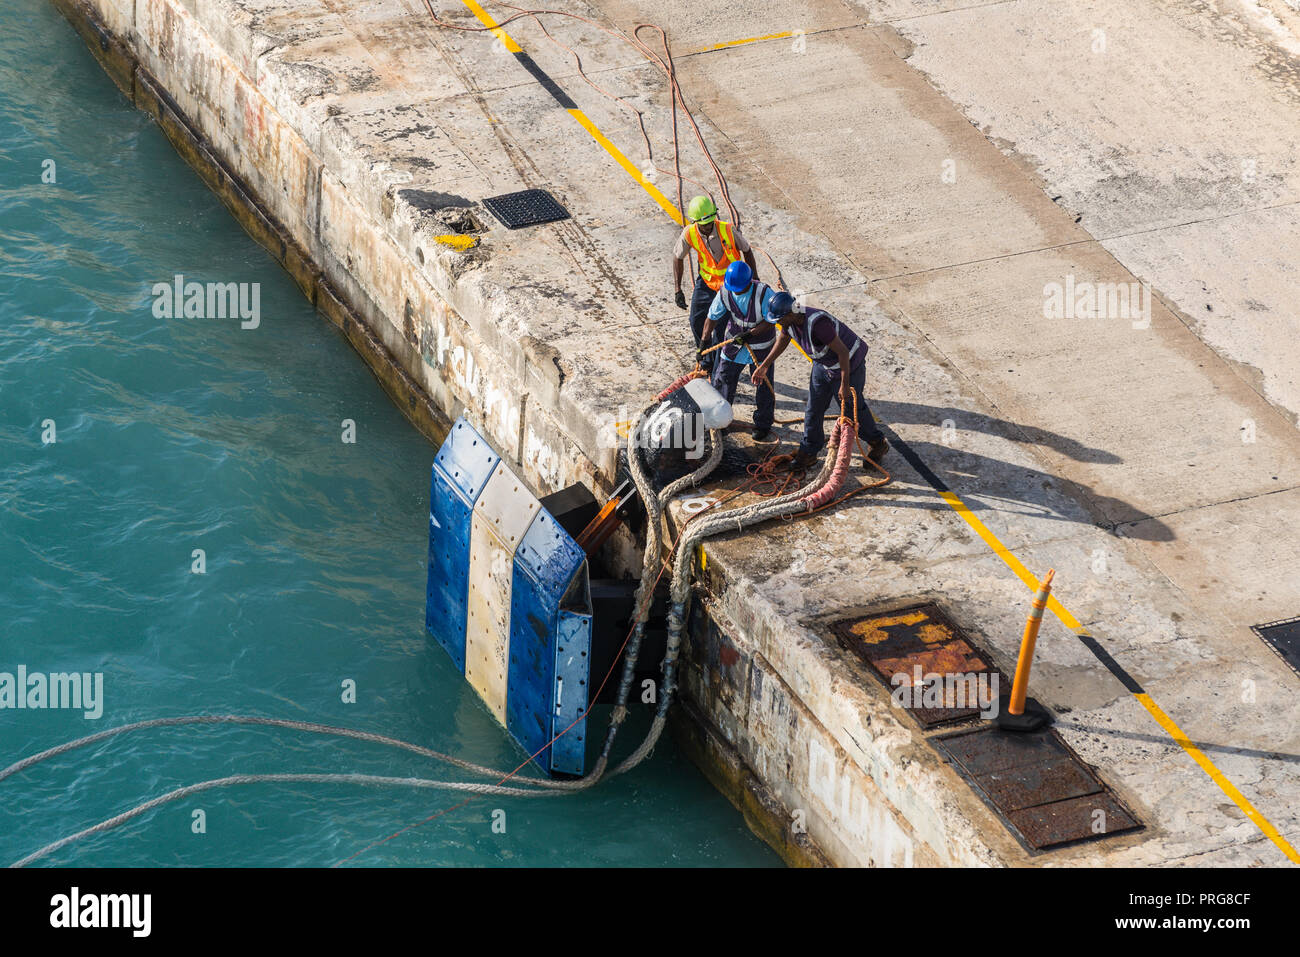 Bridgetown, Barbados - December 18, 2016: Port workers on mooring rope of a ship in harbor of Bridgetown port, Barbados island, Caribbean. Stock Photo